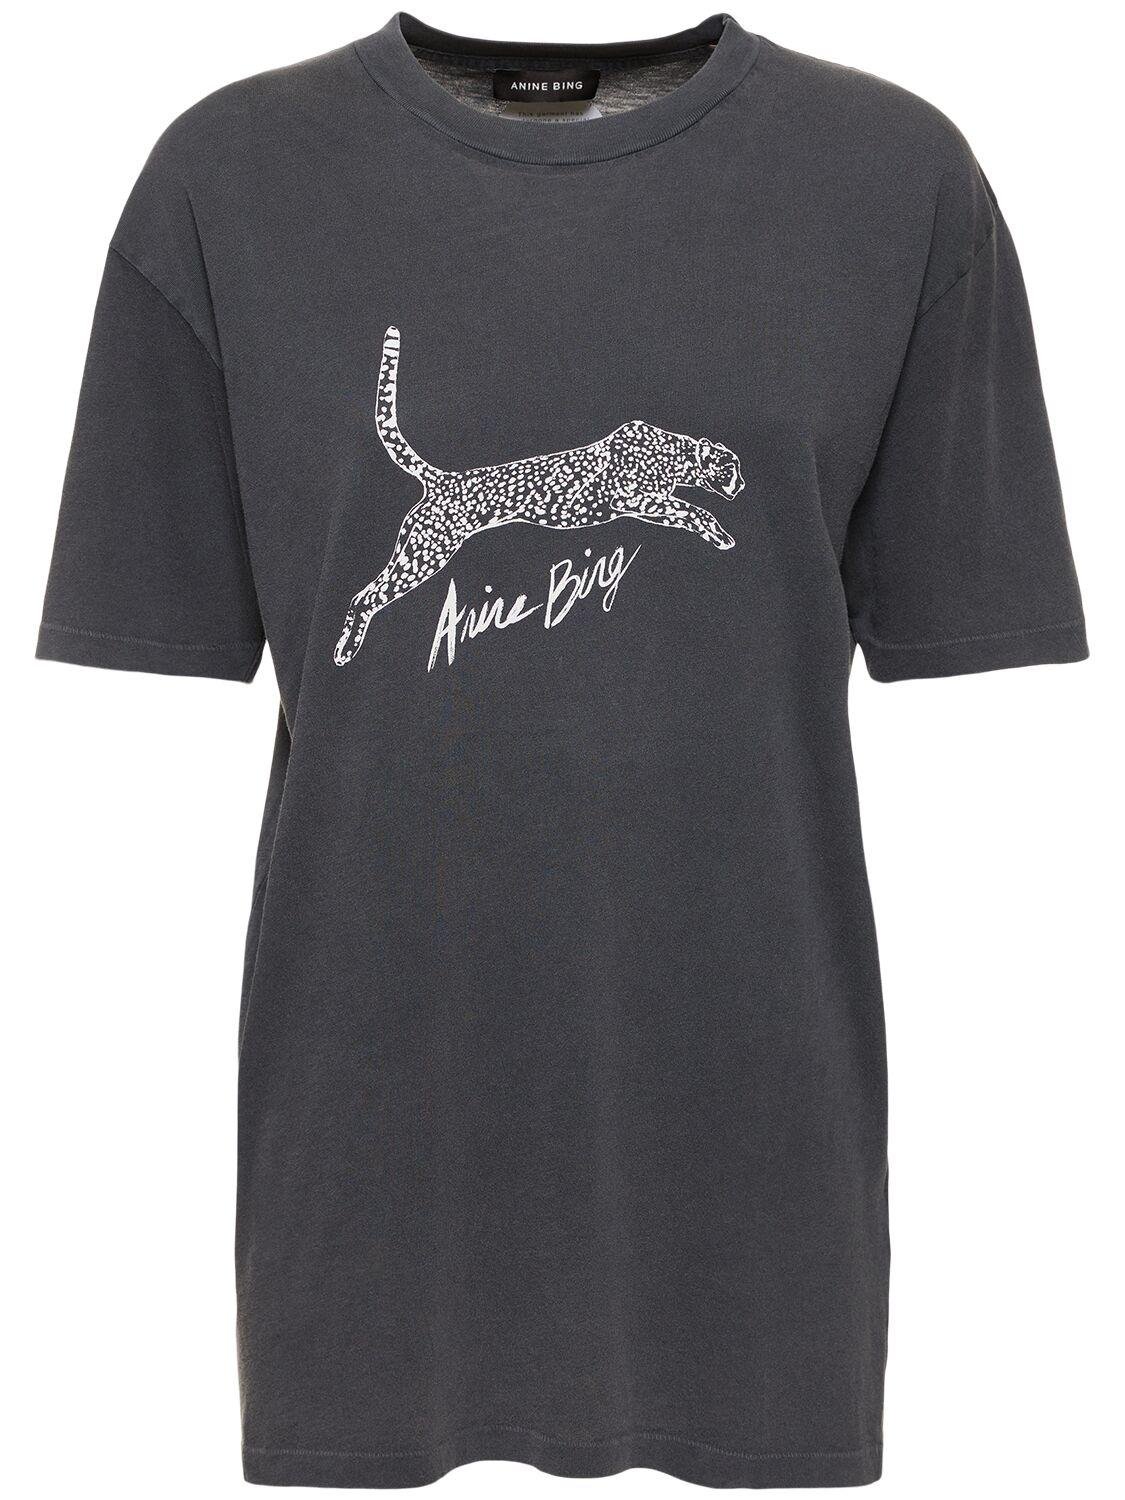 Walker Spotted Leopard Cotton T-shirt by ANINE BING